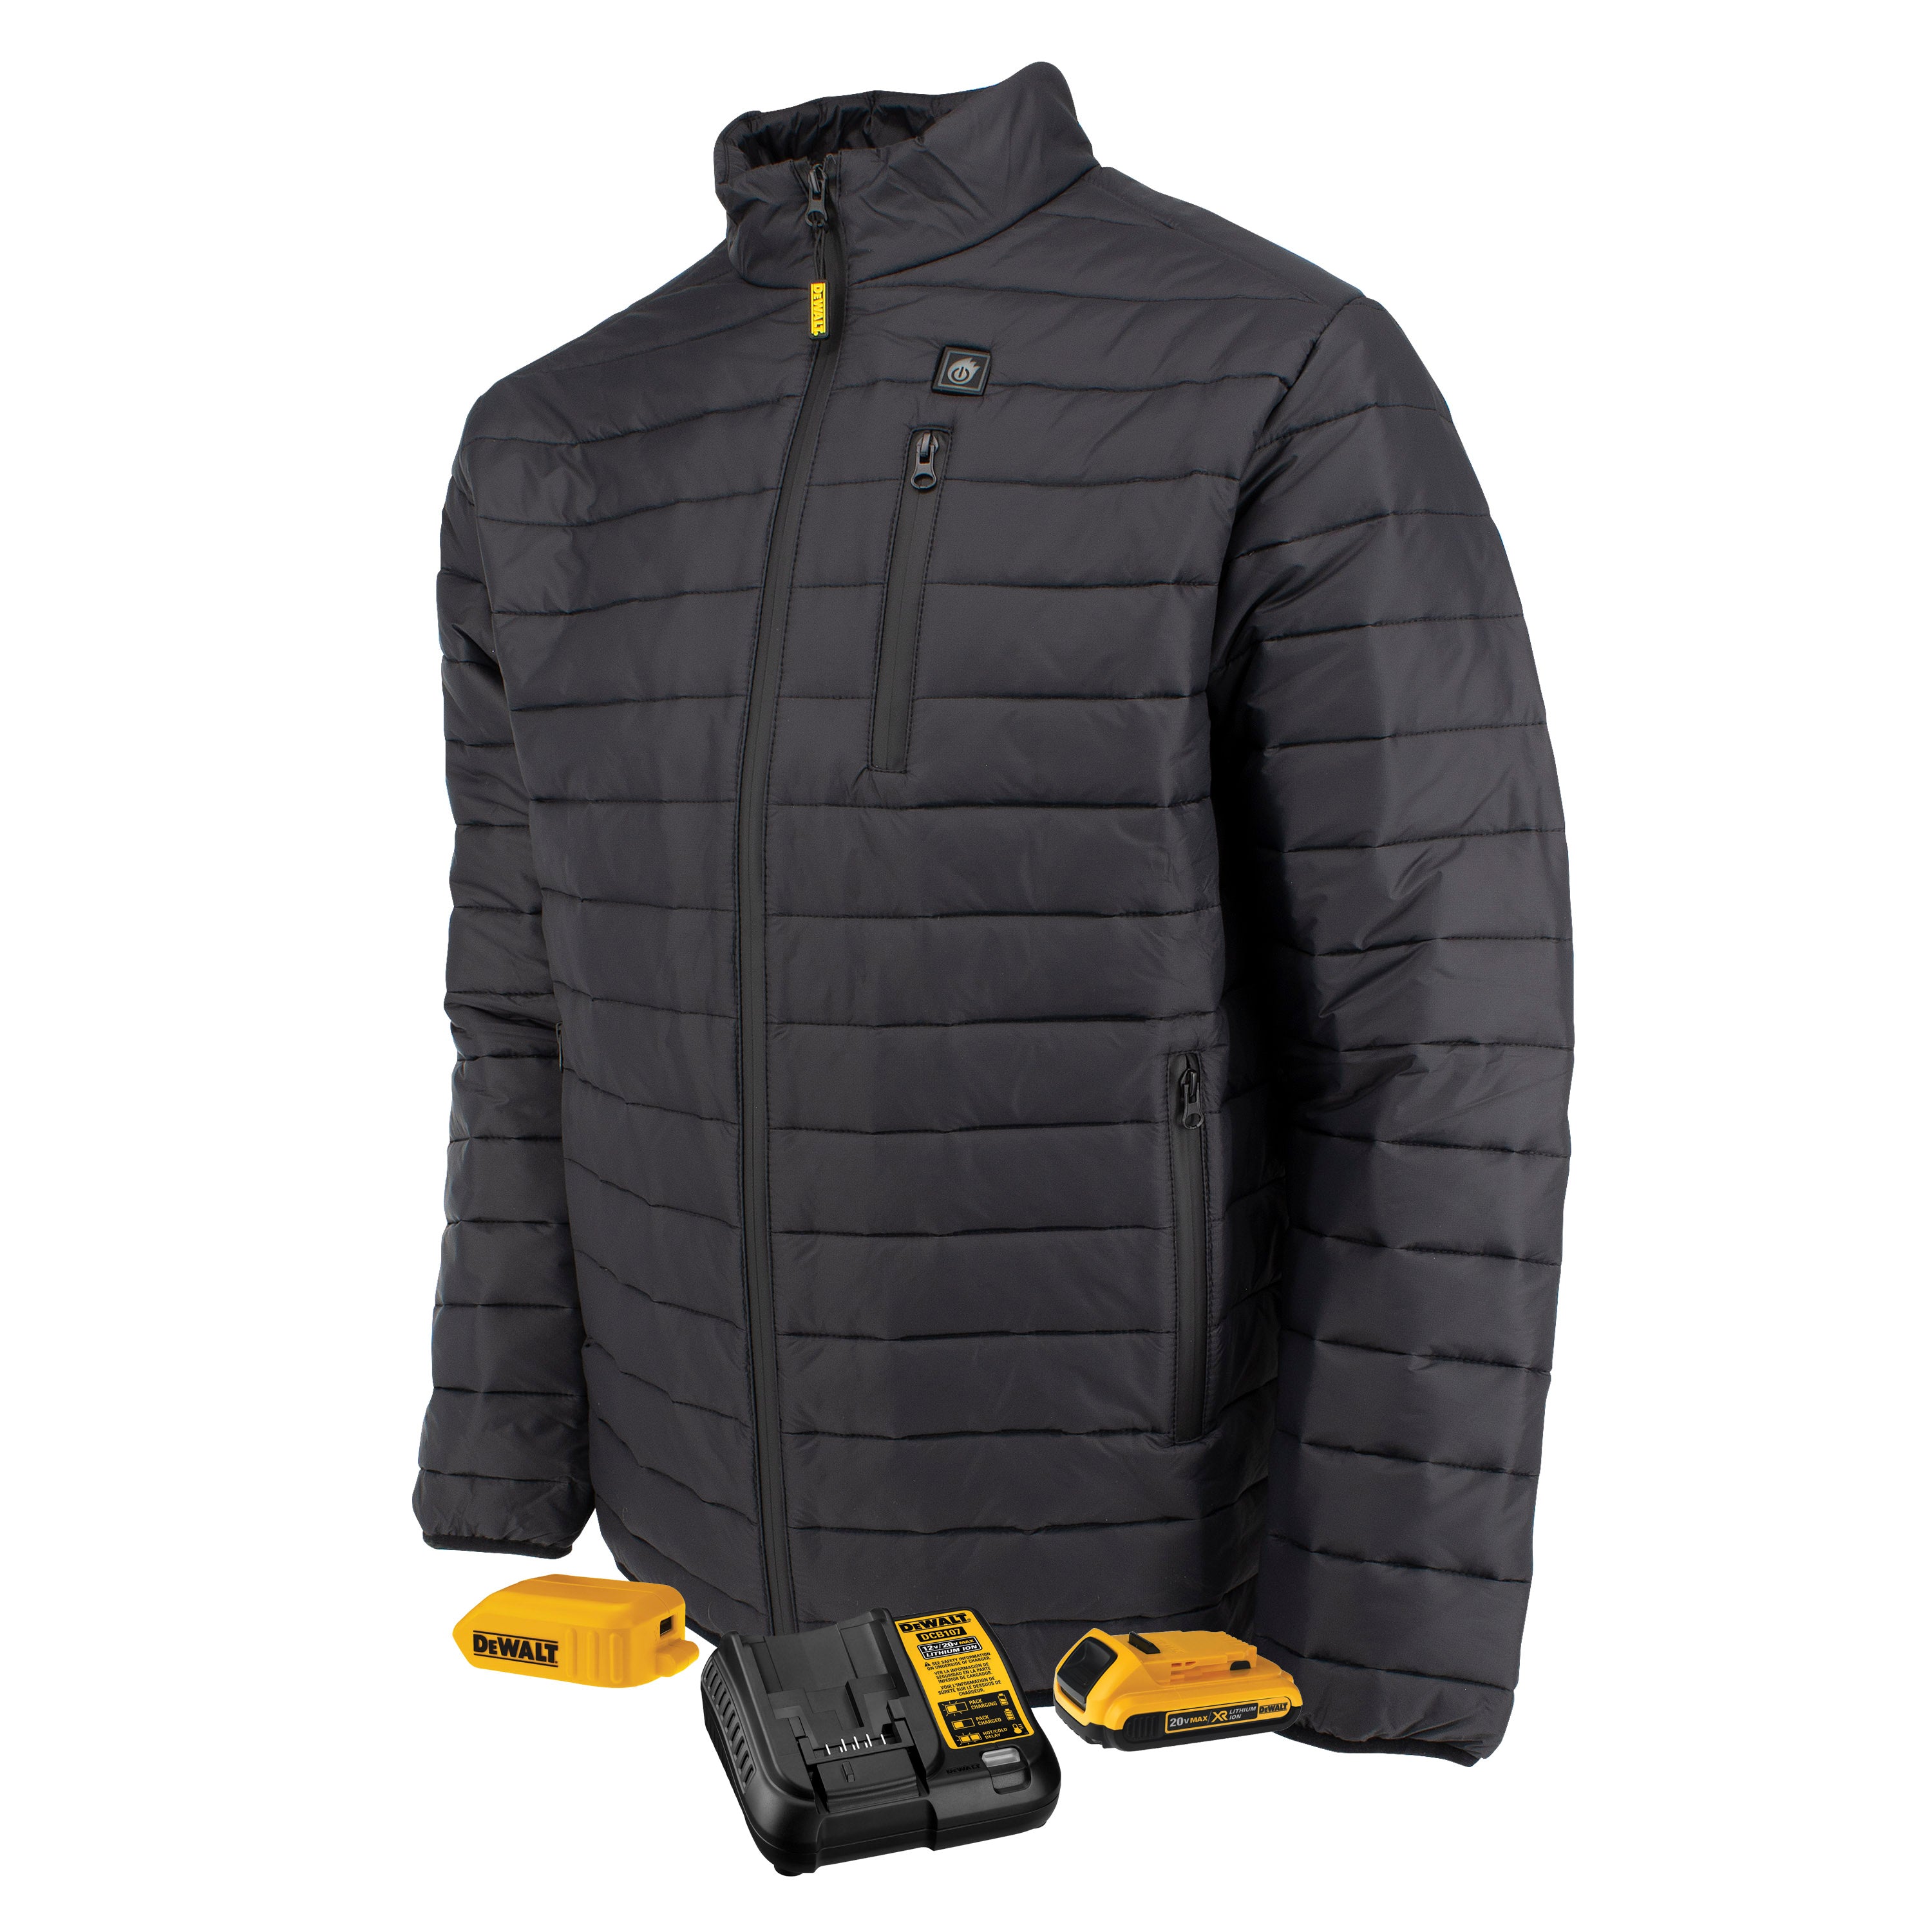 DCHV093 Men's Heated Puffer Jacket Kitted - Black